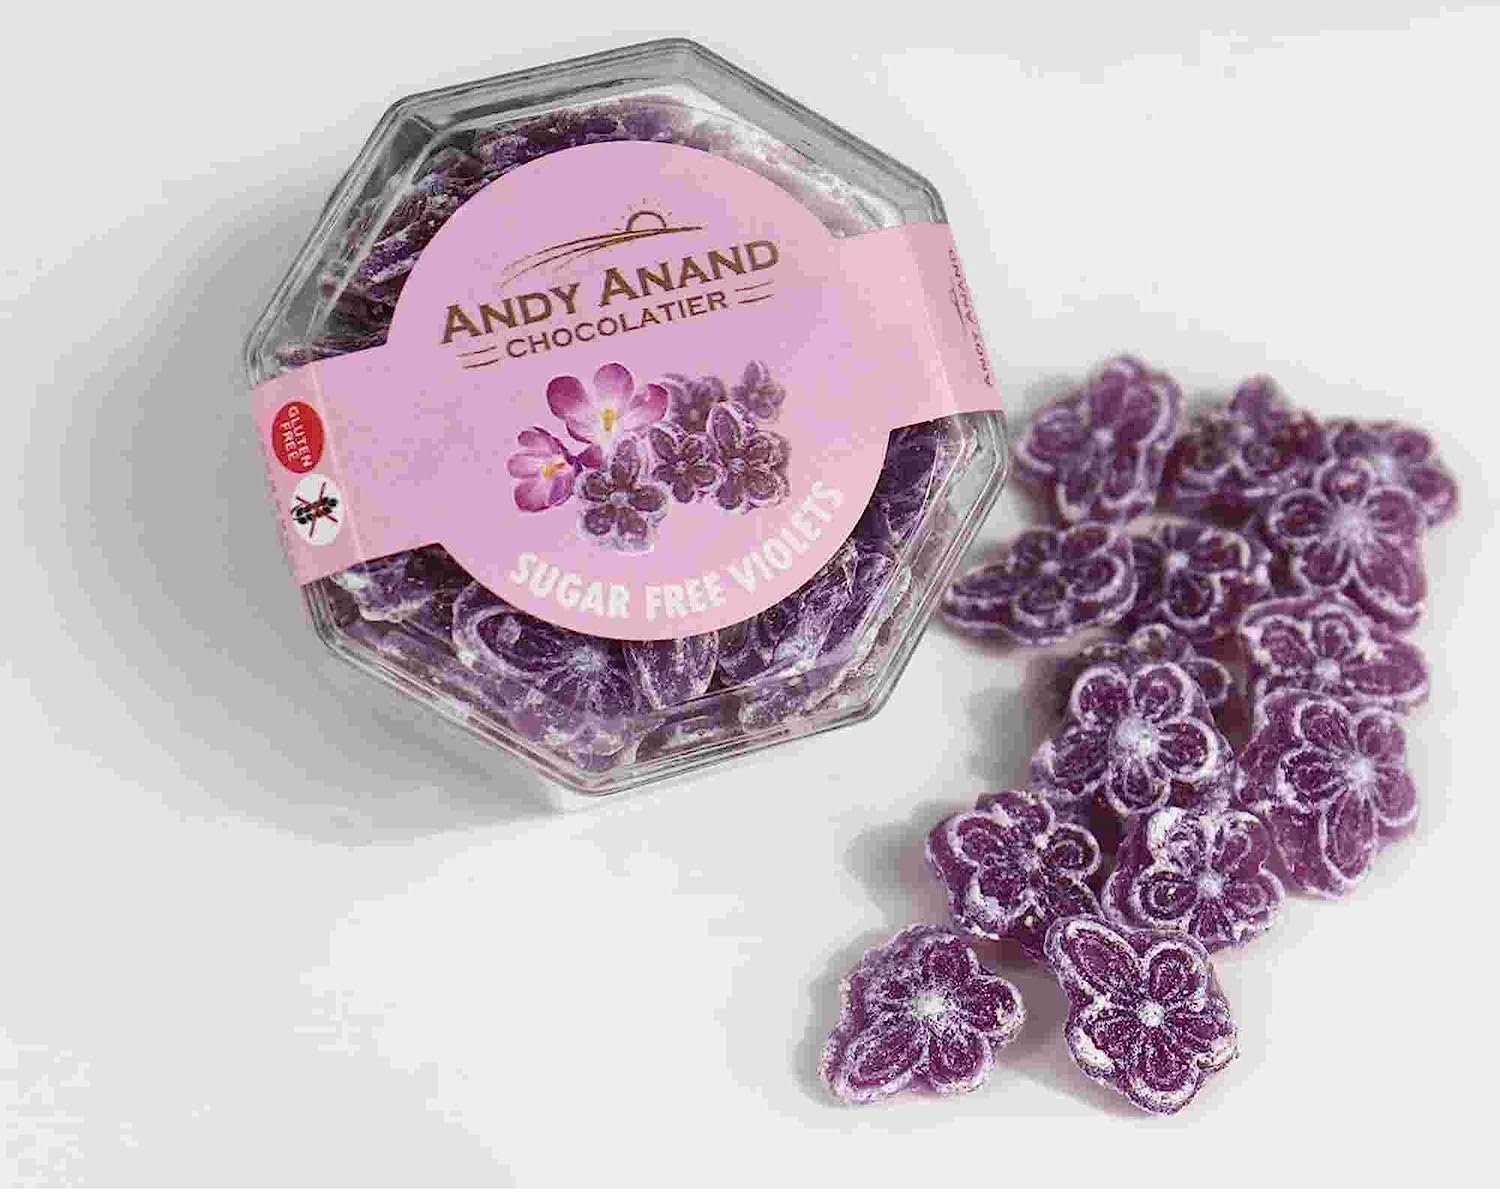 Sugar-Free Violets Candy